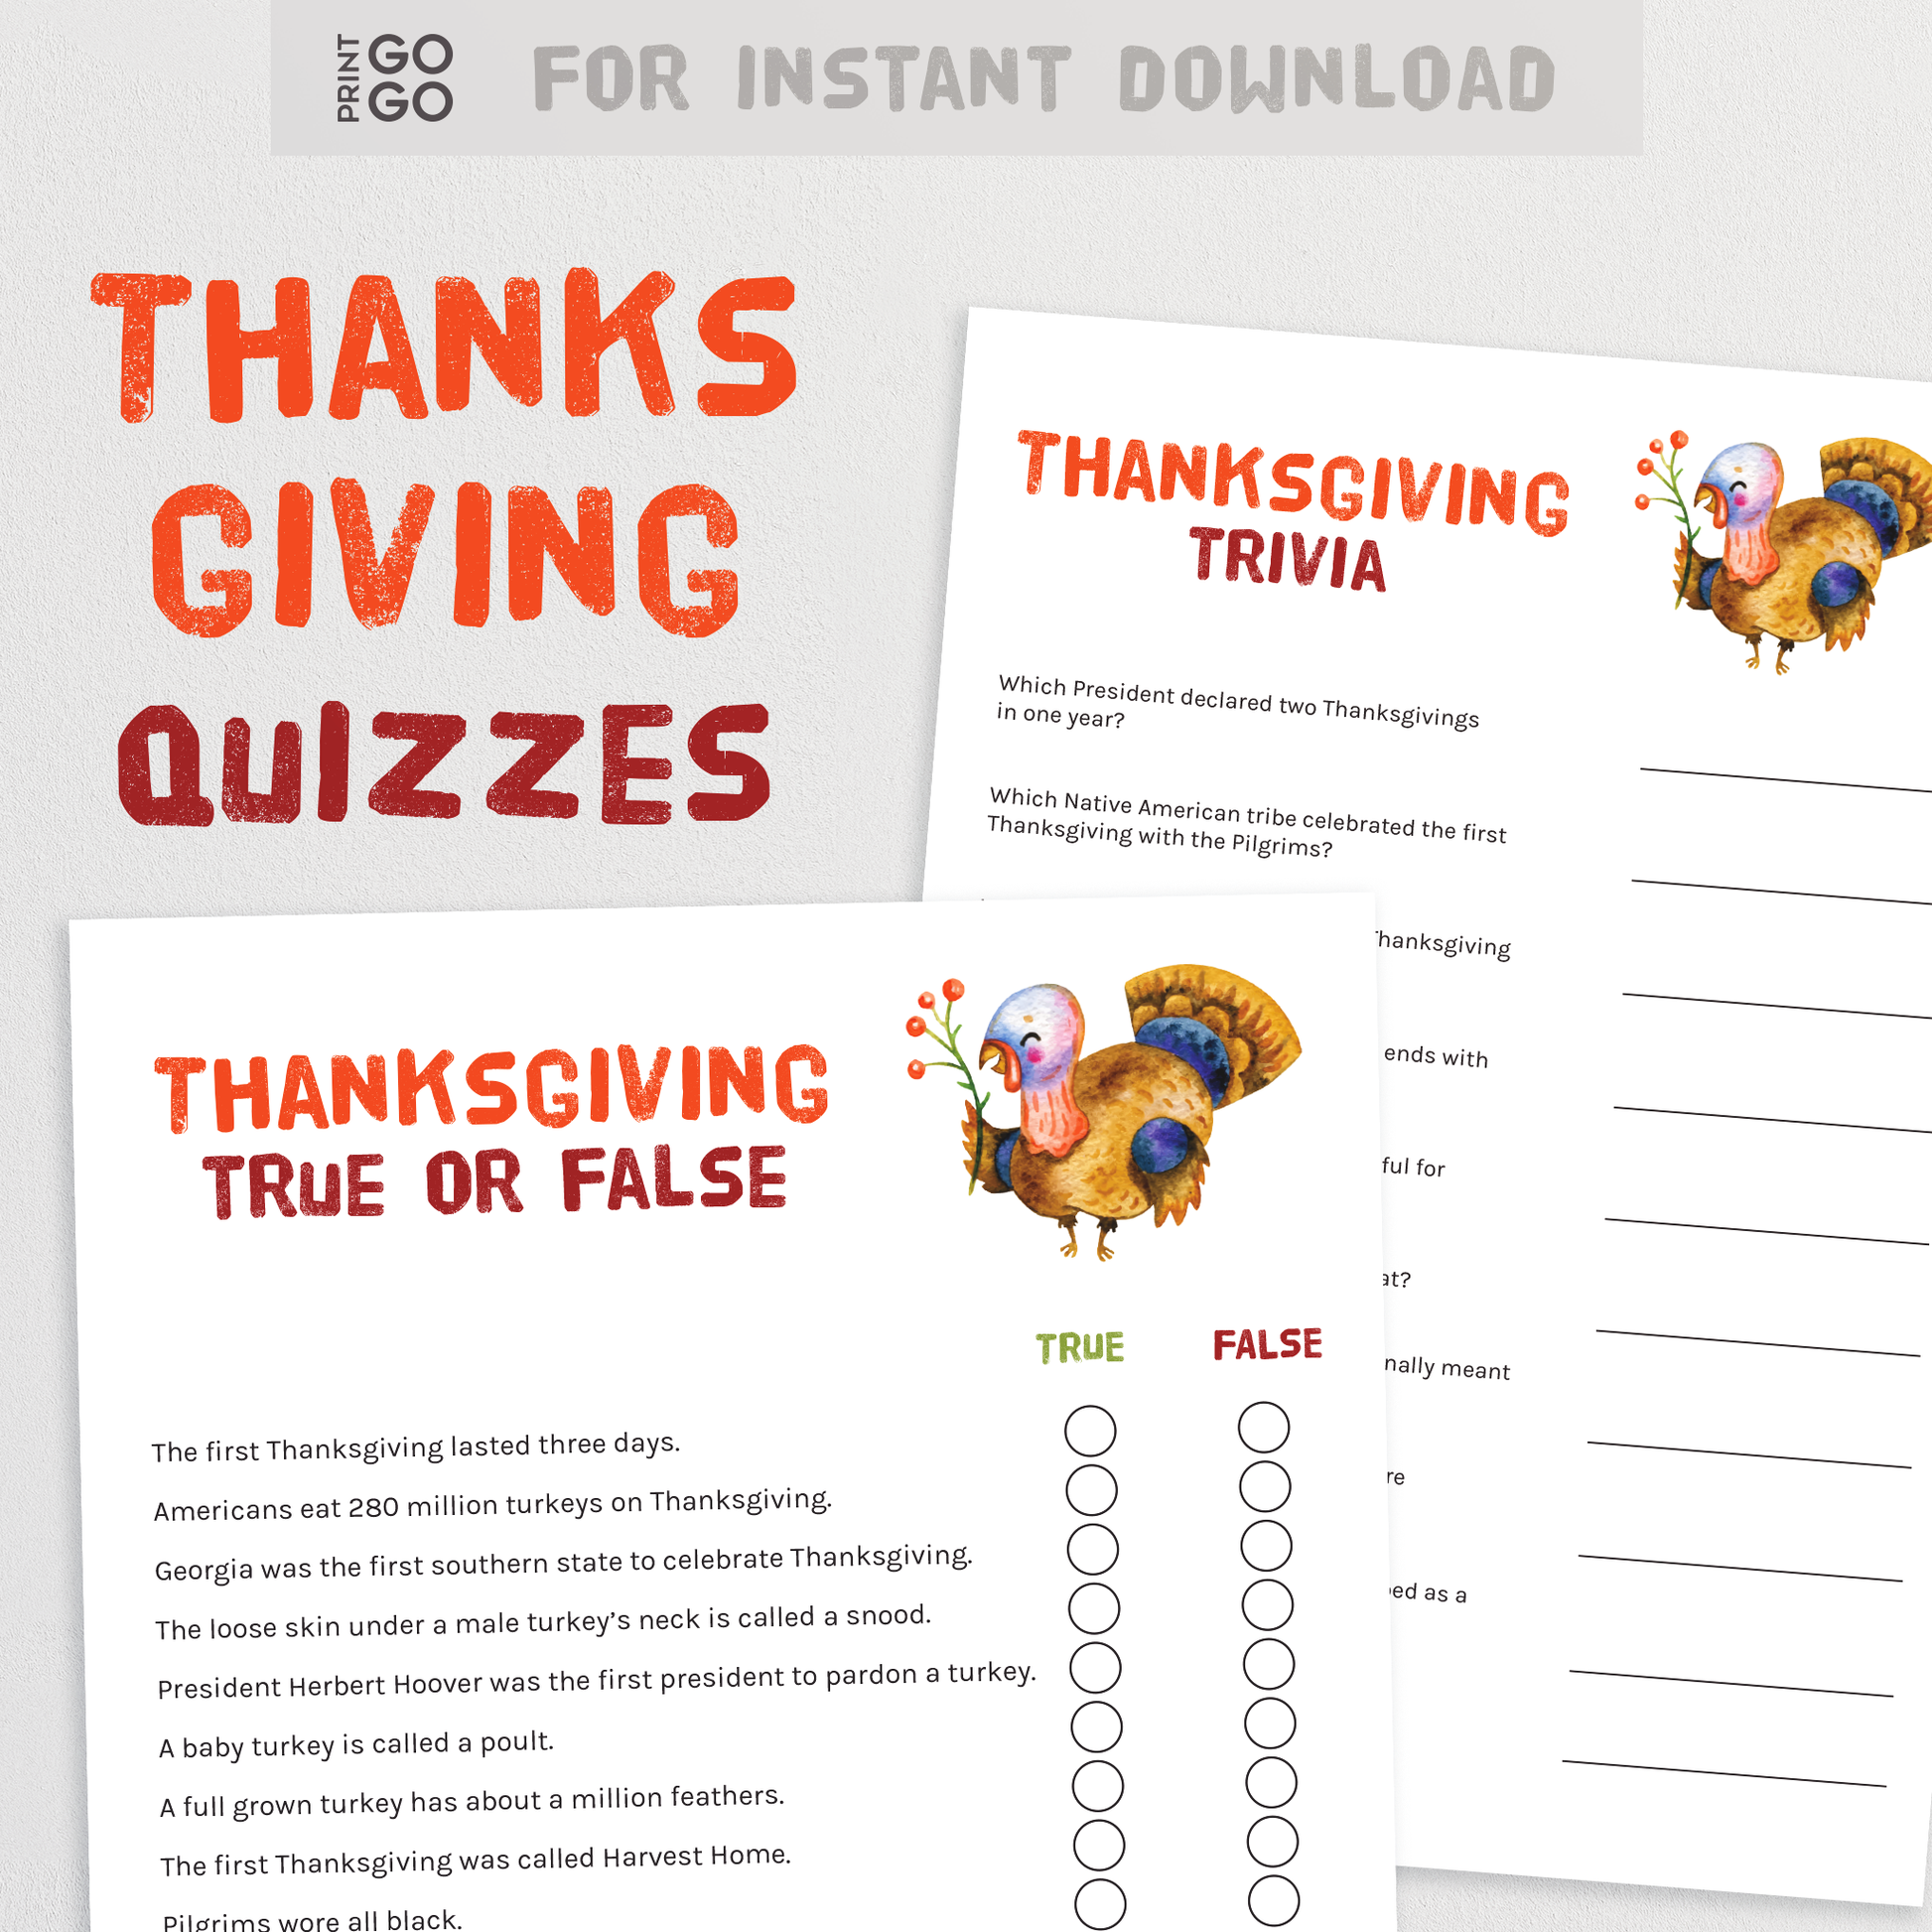 Thanksgiving Quiz